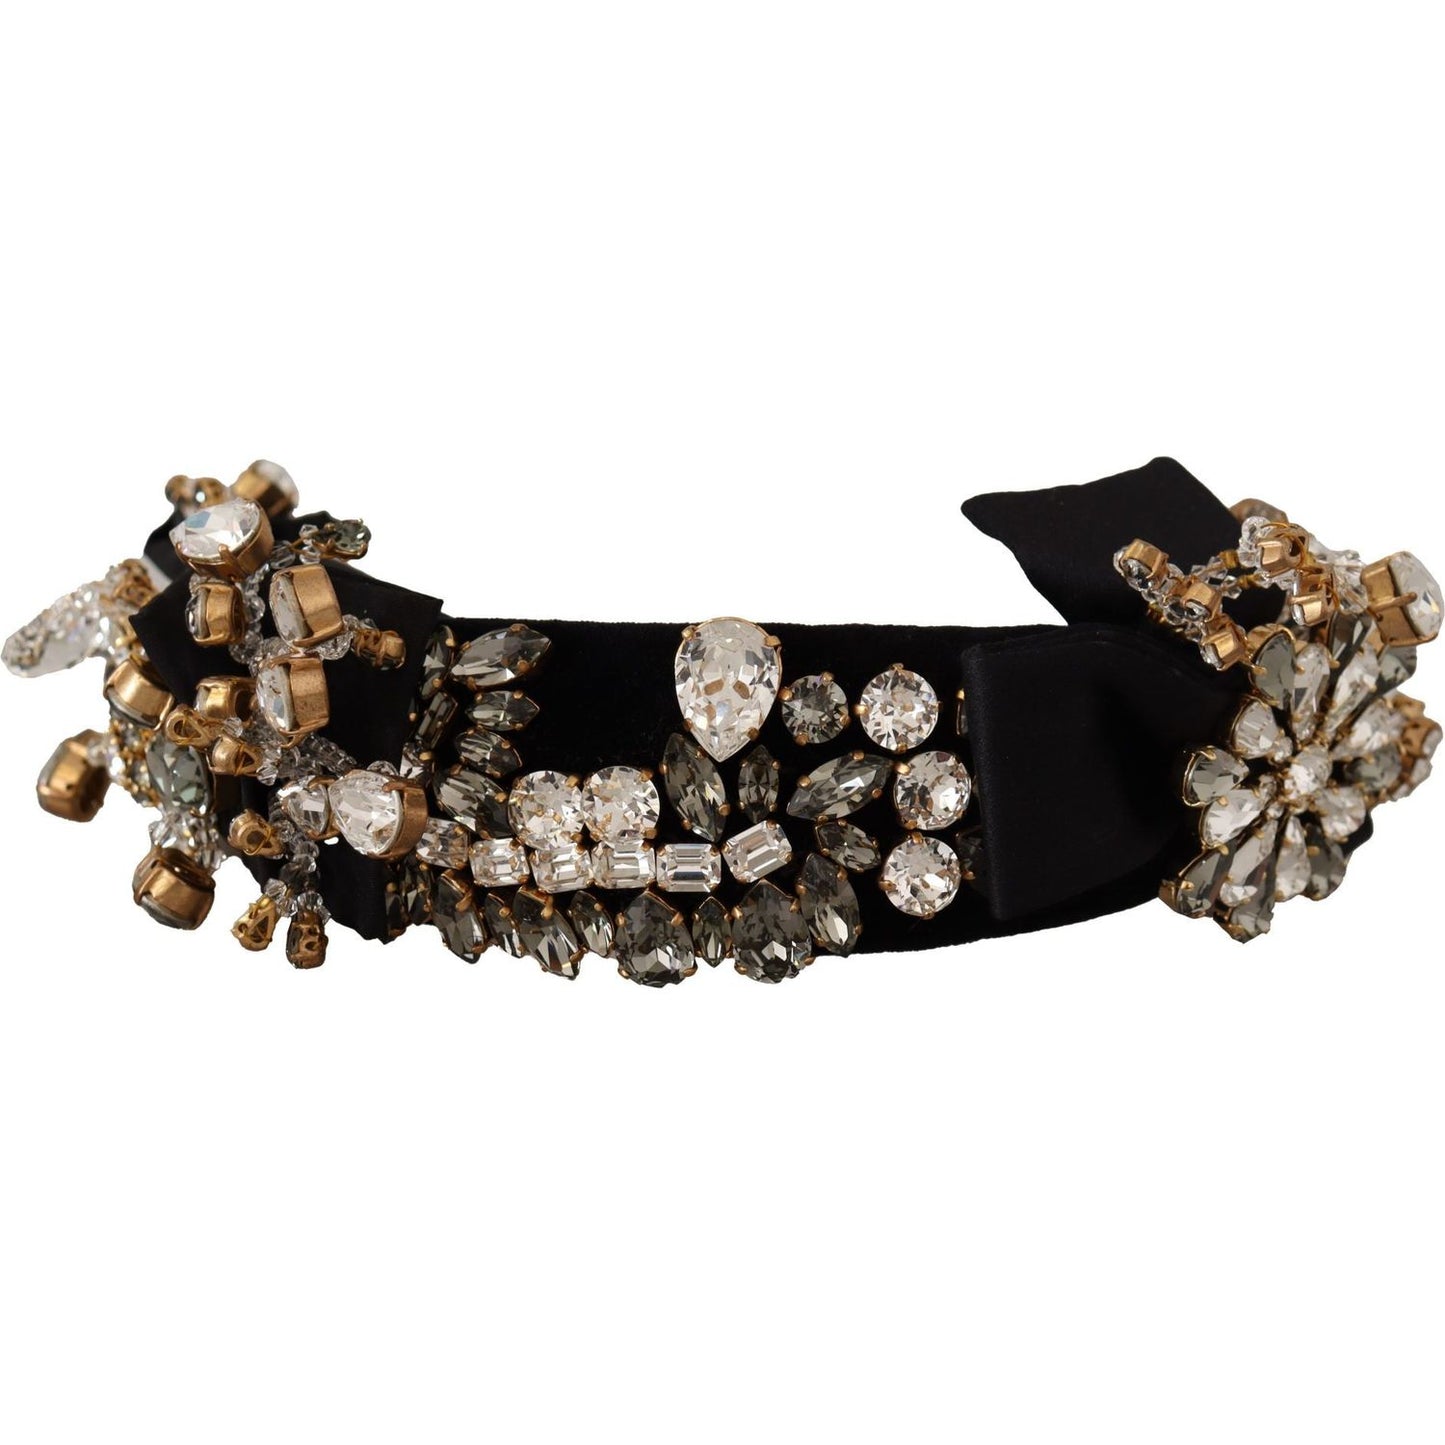 Dolce & Gabbana Embroidered Silk Crystal Tiara clear-crystal-embellished-silk-fiocco-diadem-headband IMG_8159-scaled-ca59723a-e1a_aa73b432-46b0-4b13-aa2c-2a2b8d9bd544.jpg